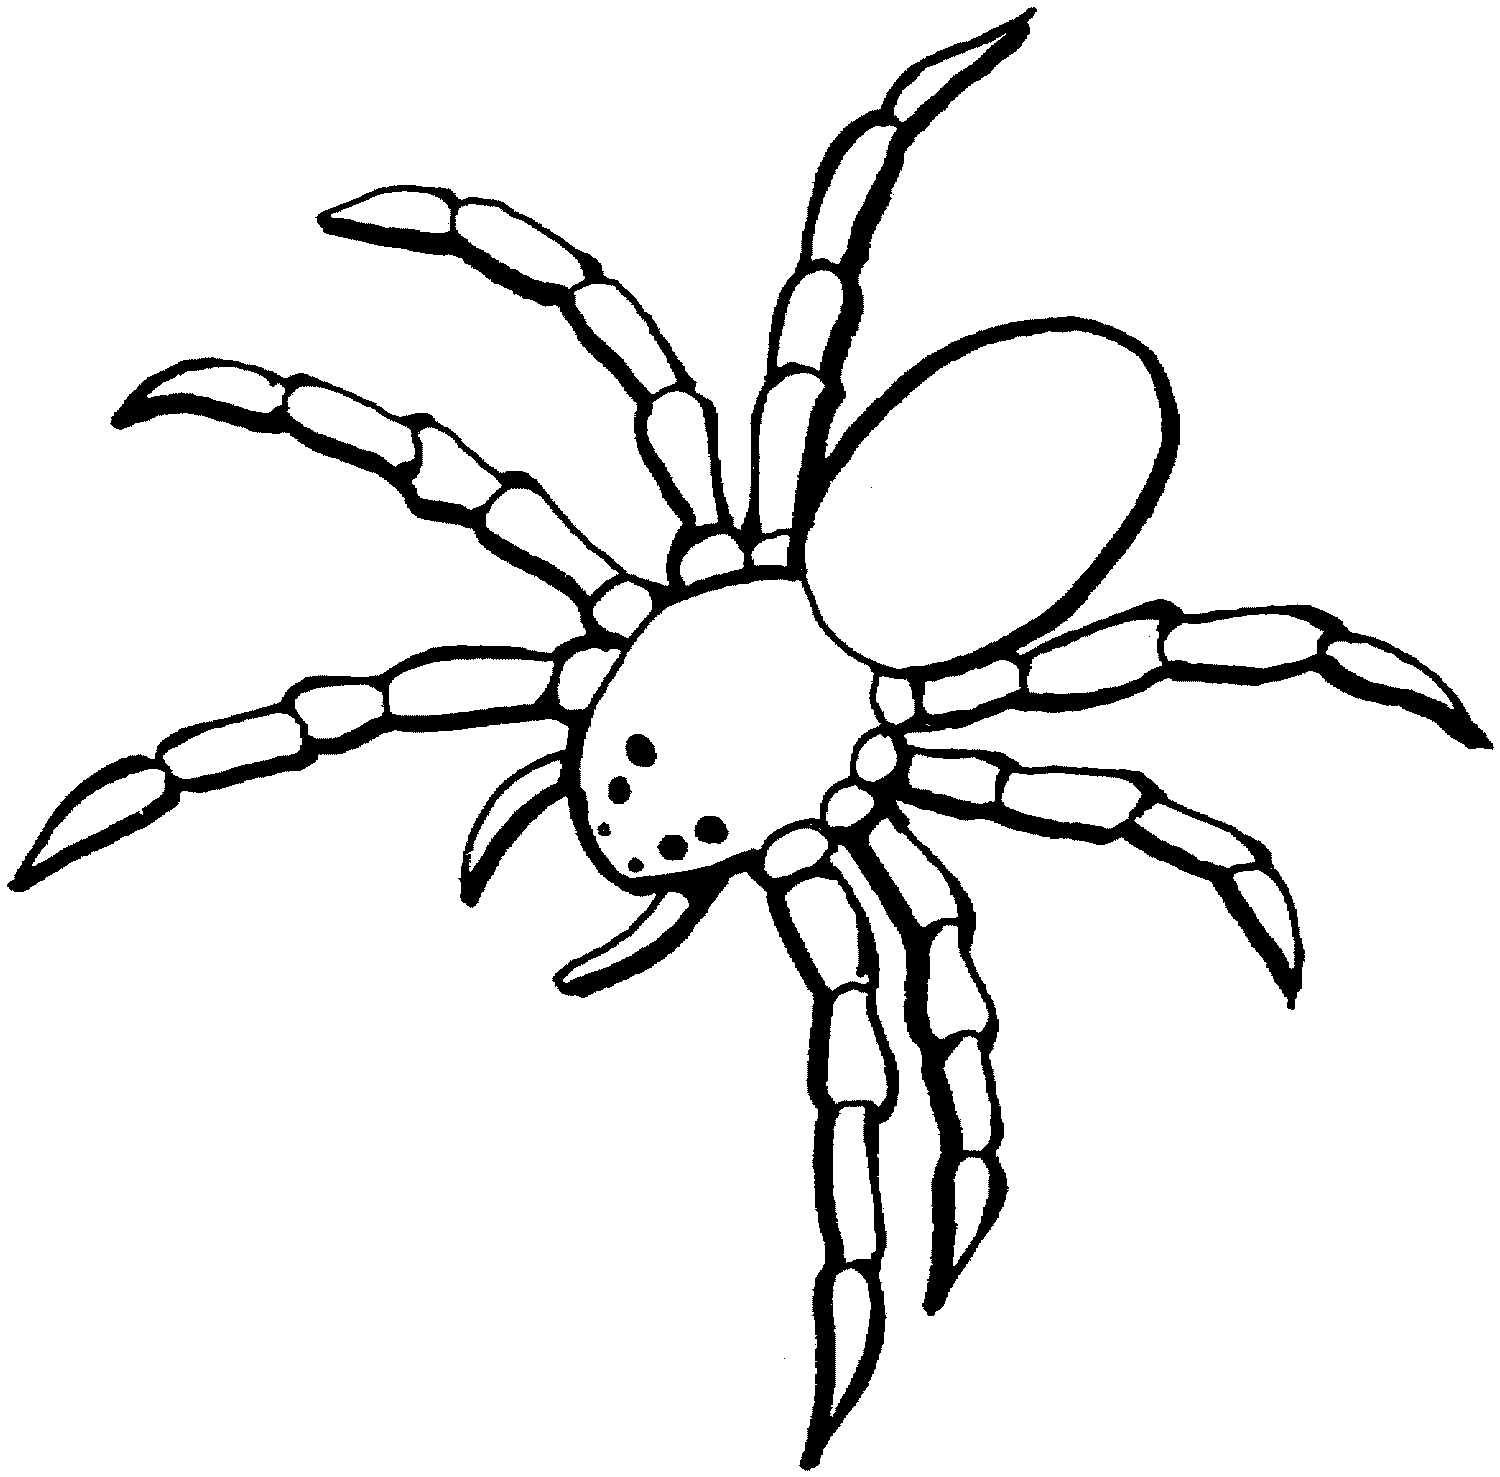 Spider Clip Art To Print